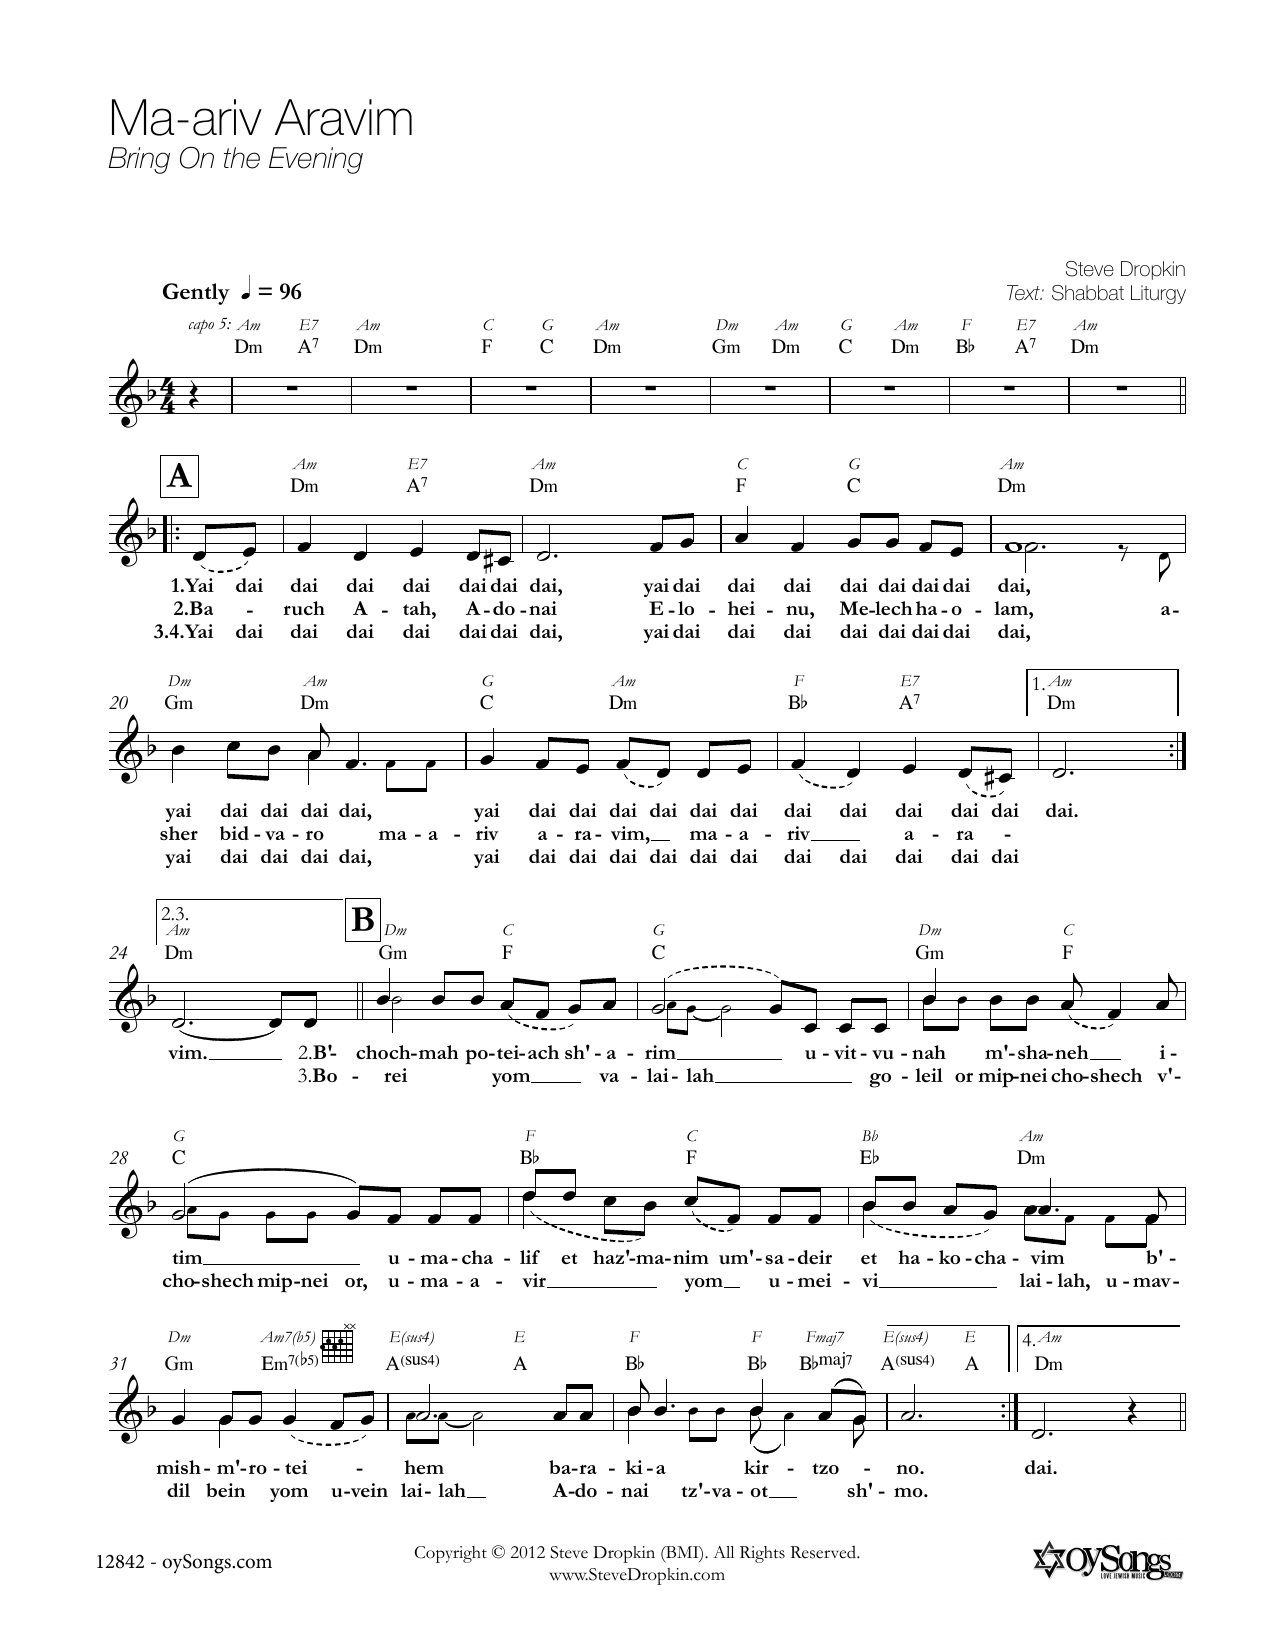 Steve Dropkin Ma-ariv Aravim Sheet Music Notes & Chords for Melody Line, Lyrics & Chords - Download or Print PDF